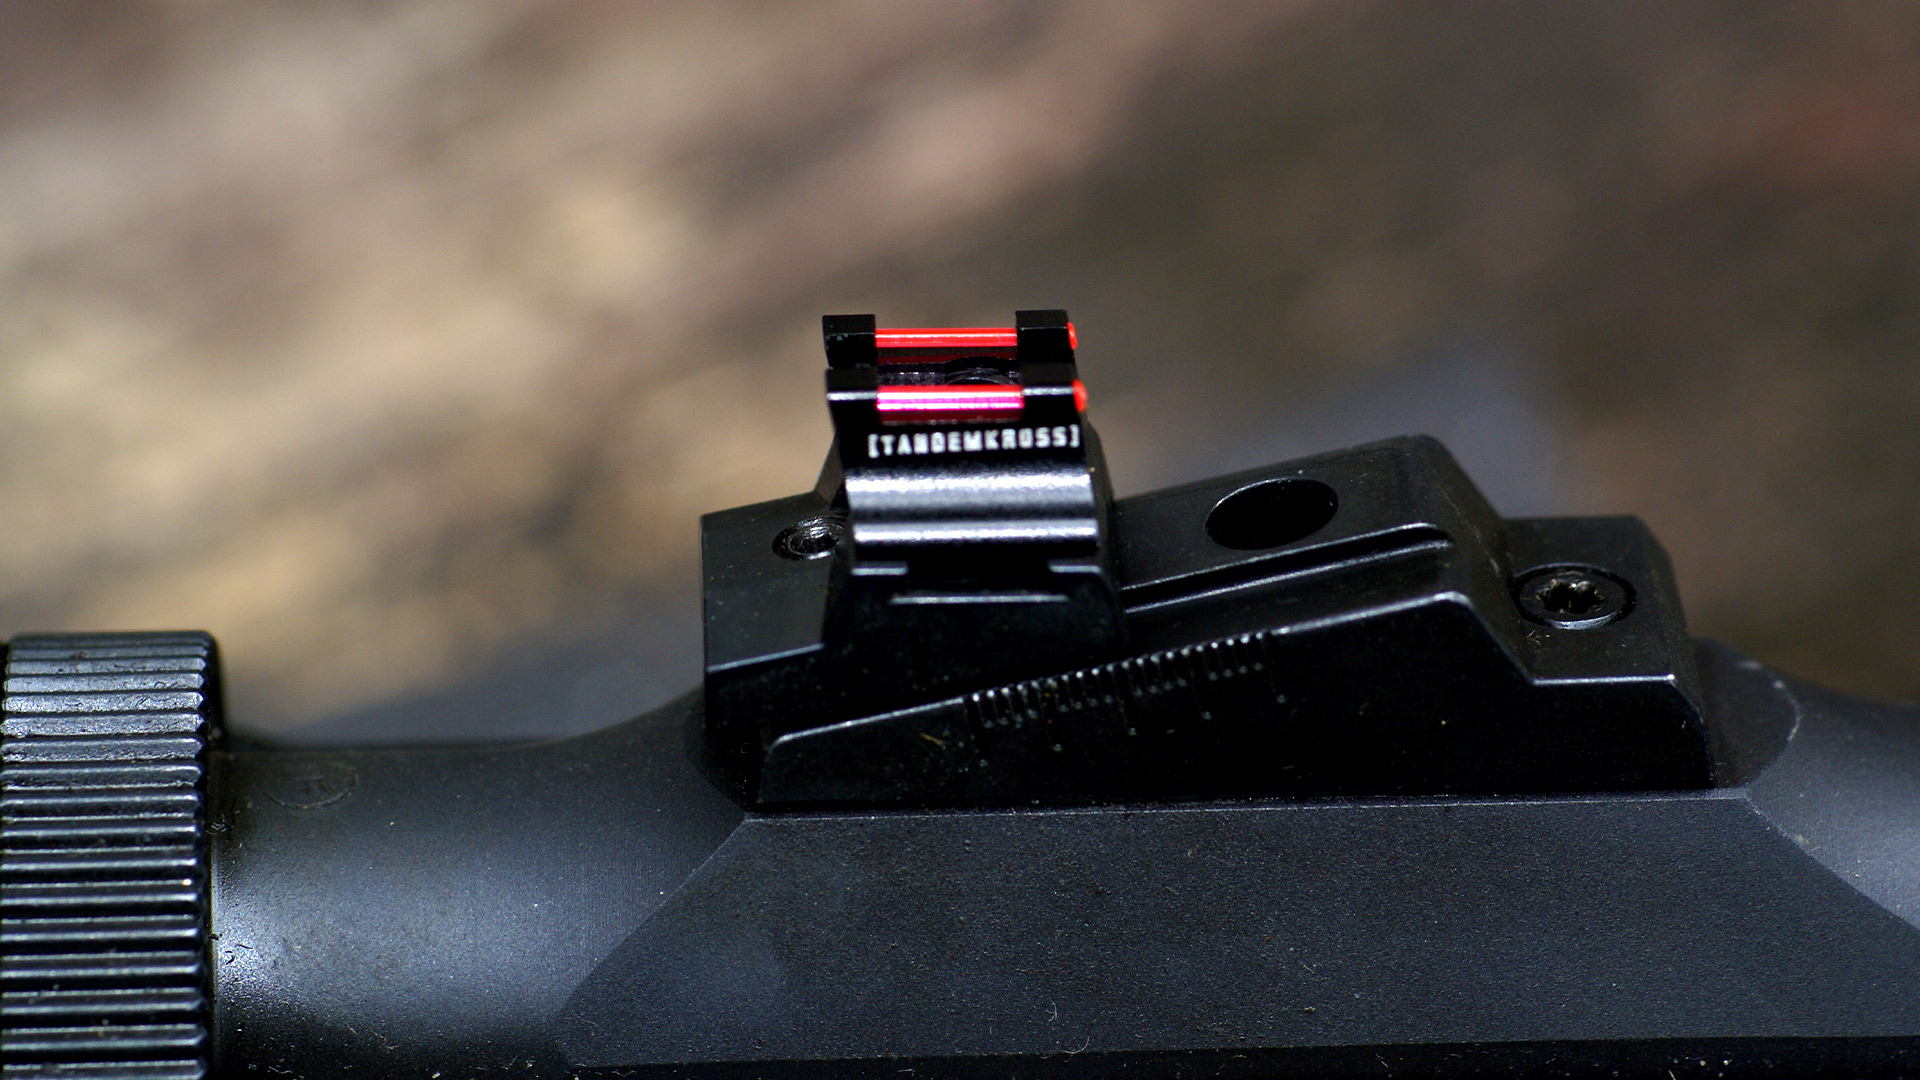 Tandemkross Ruger PC9 fiber-optic sight, rear